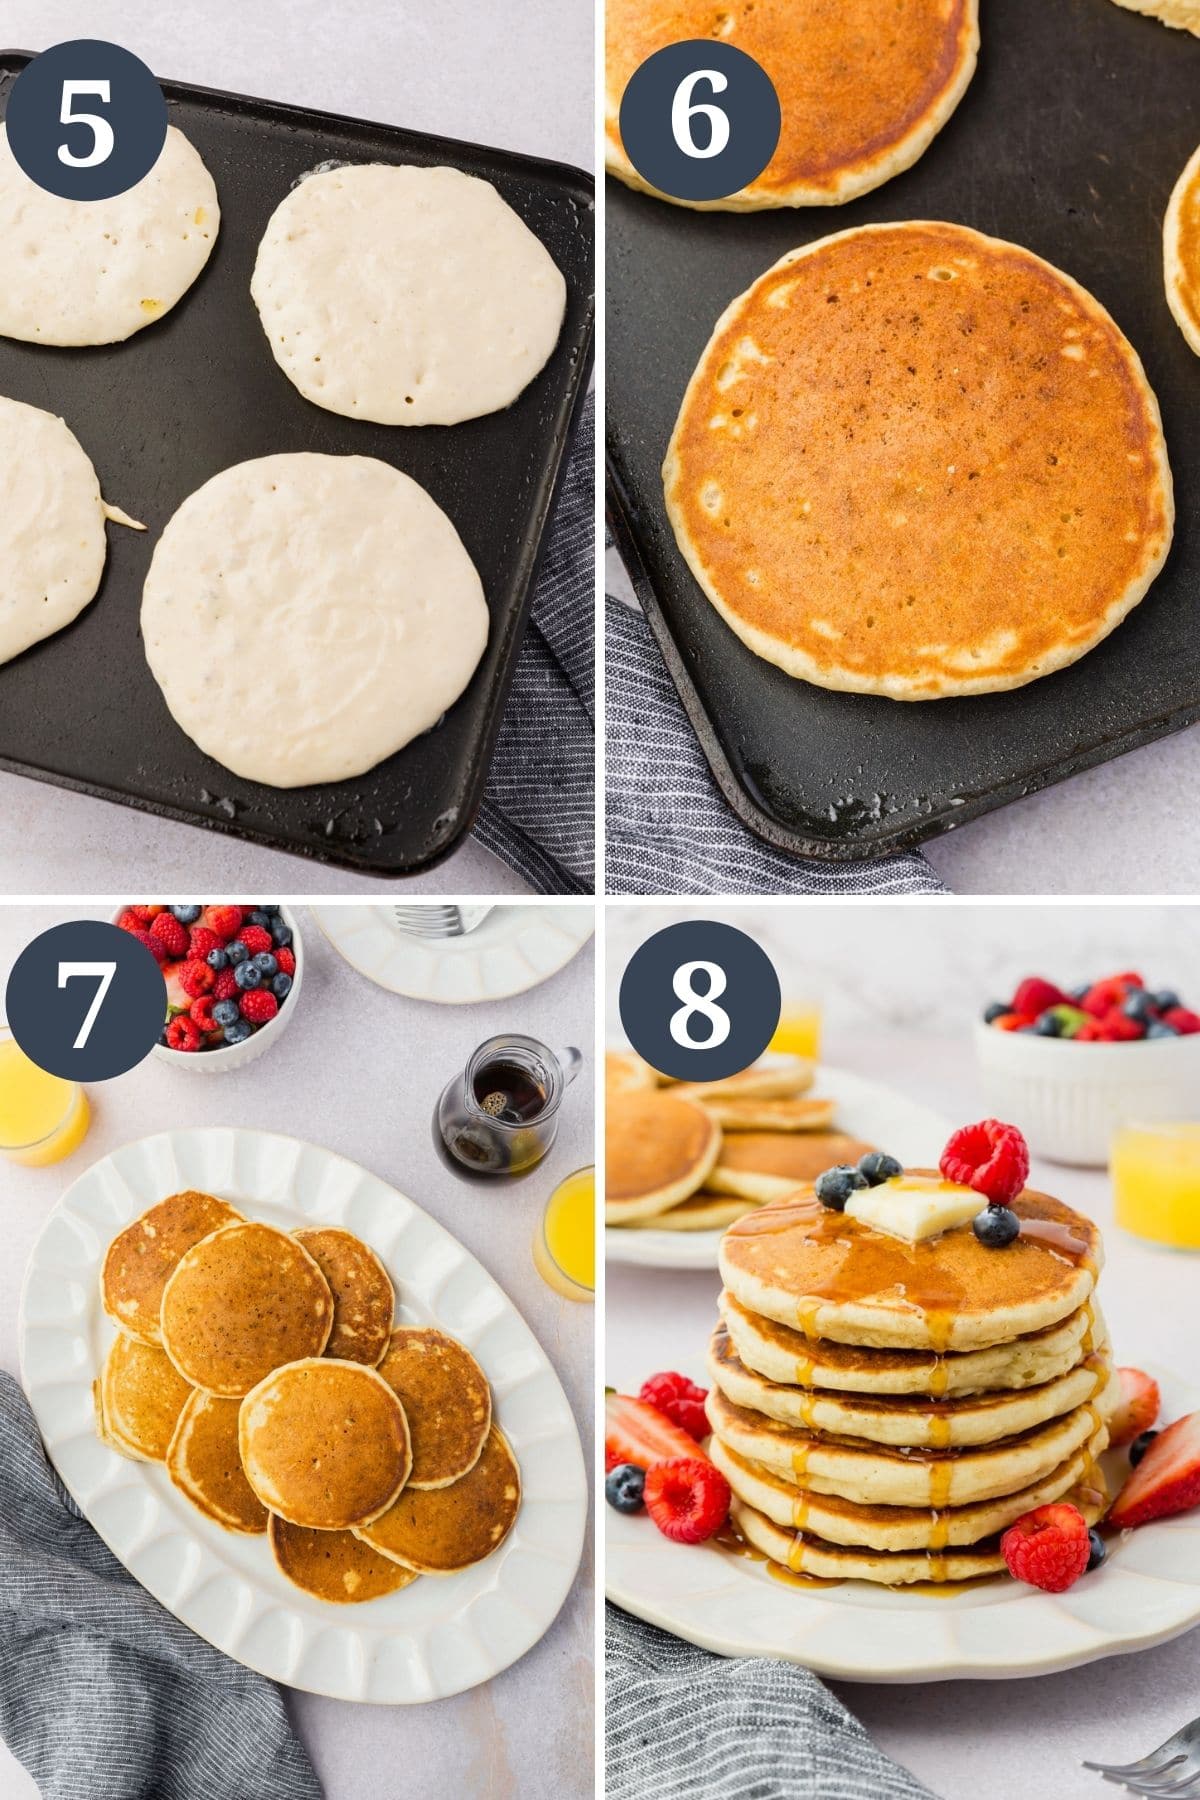 Steps 5-8 for making gluten-free pancakes.